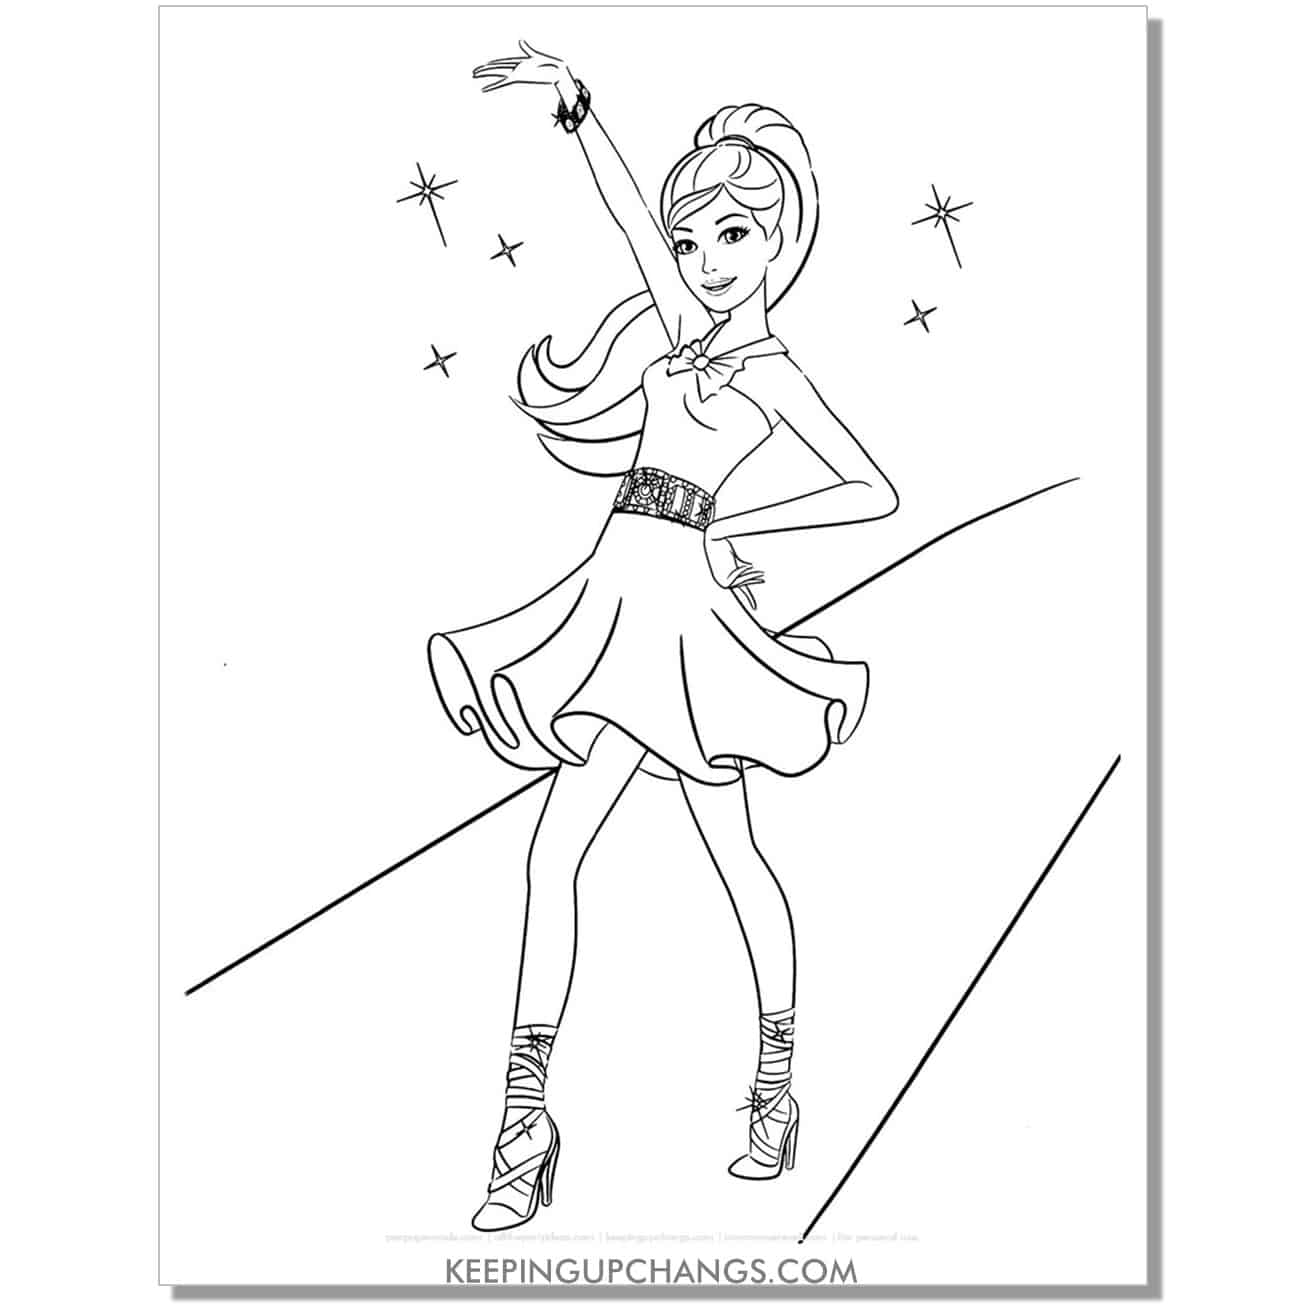 barbie on the runway in heels coloring page.